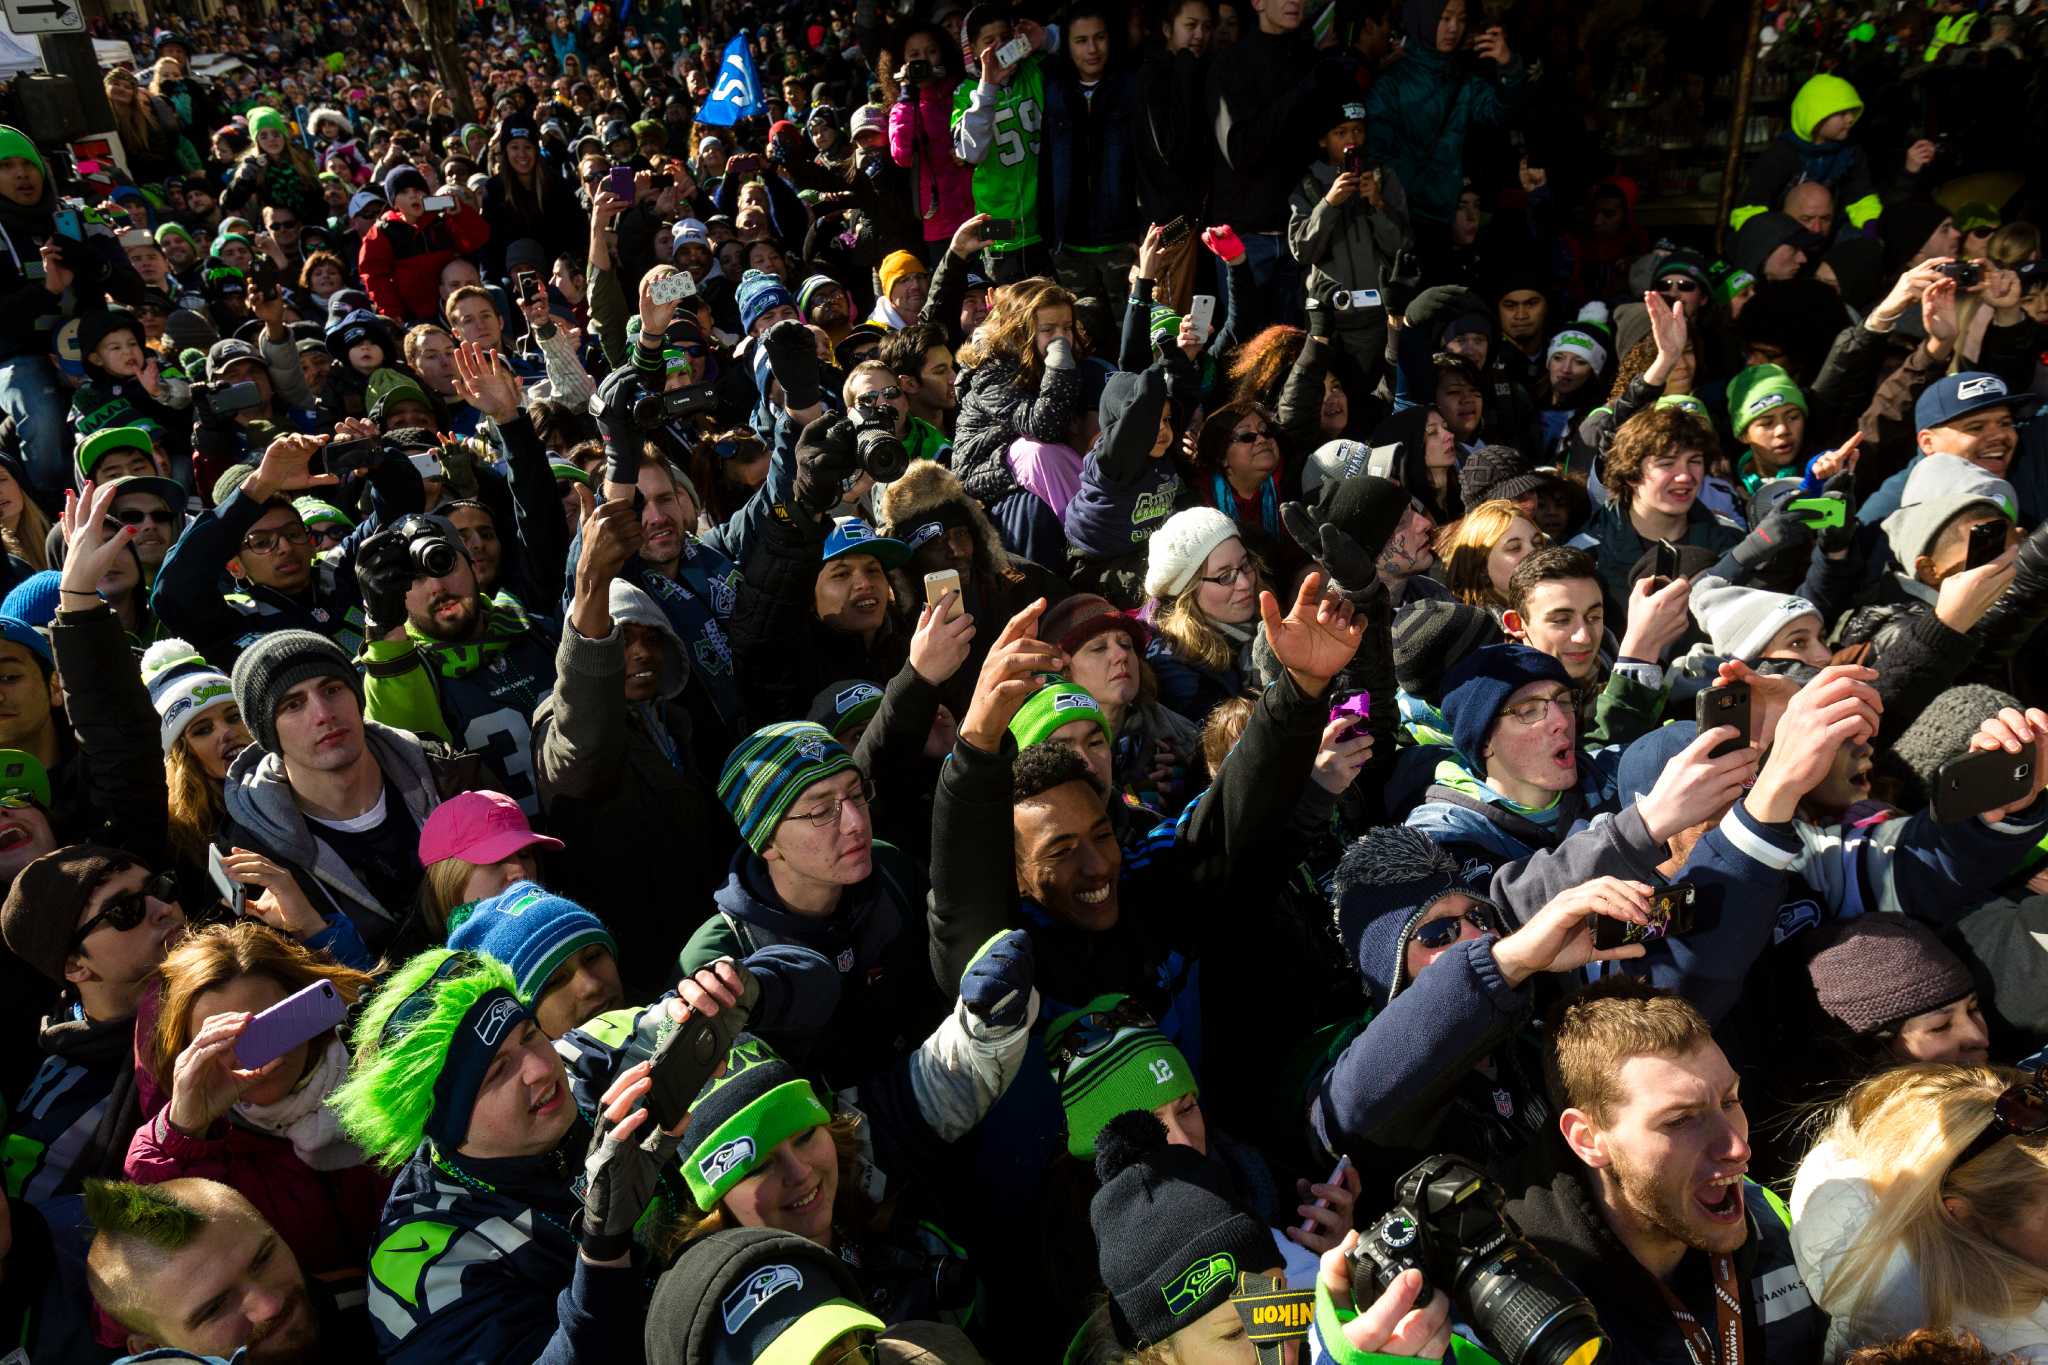 PHOTOS: 700,000 12s @ Seahawks Super Bowl Victory Parade